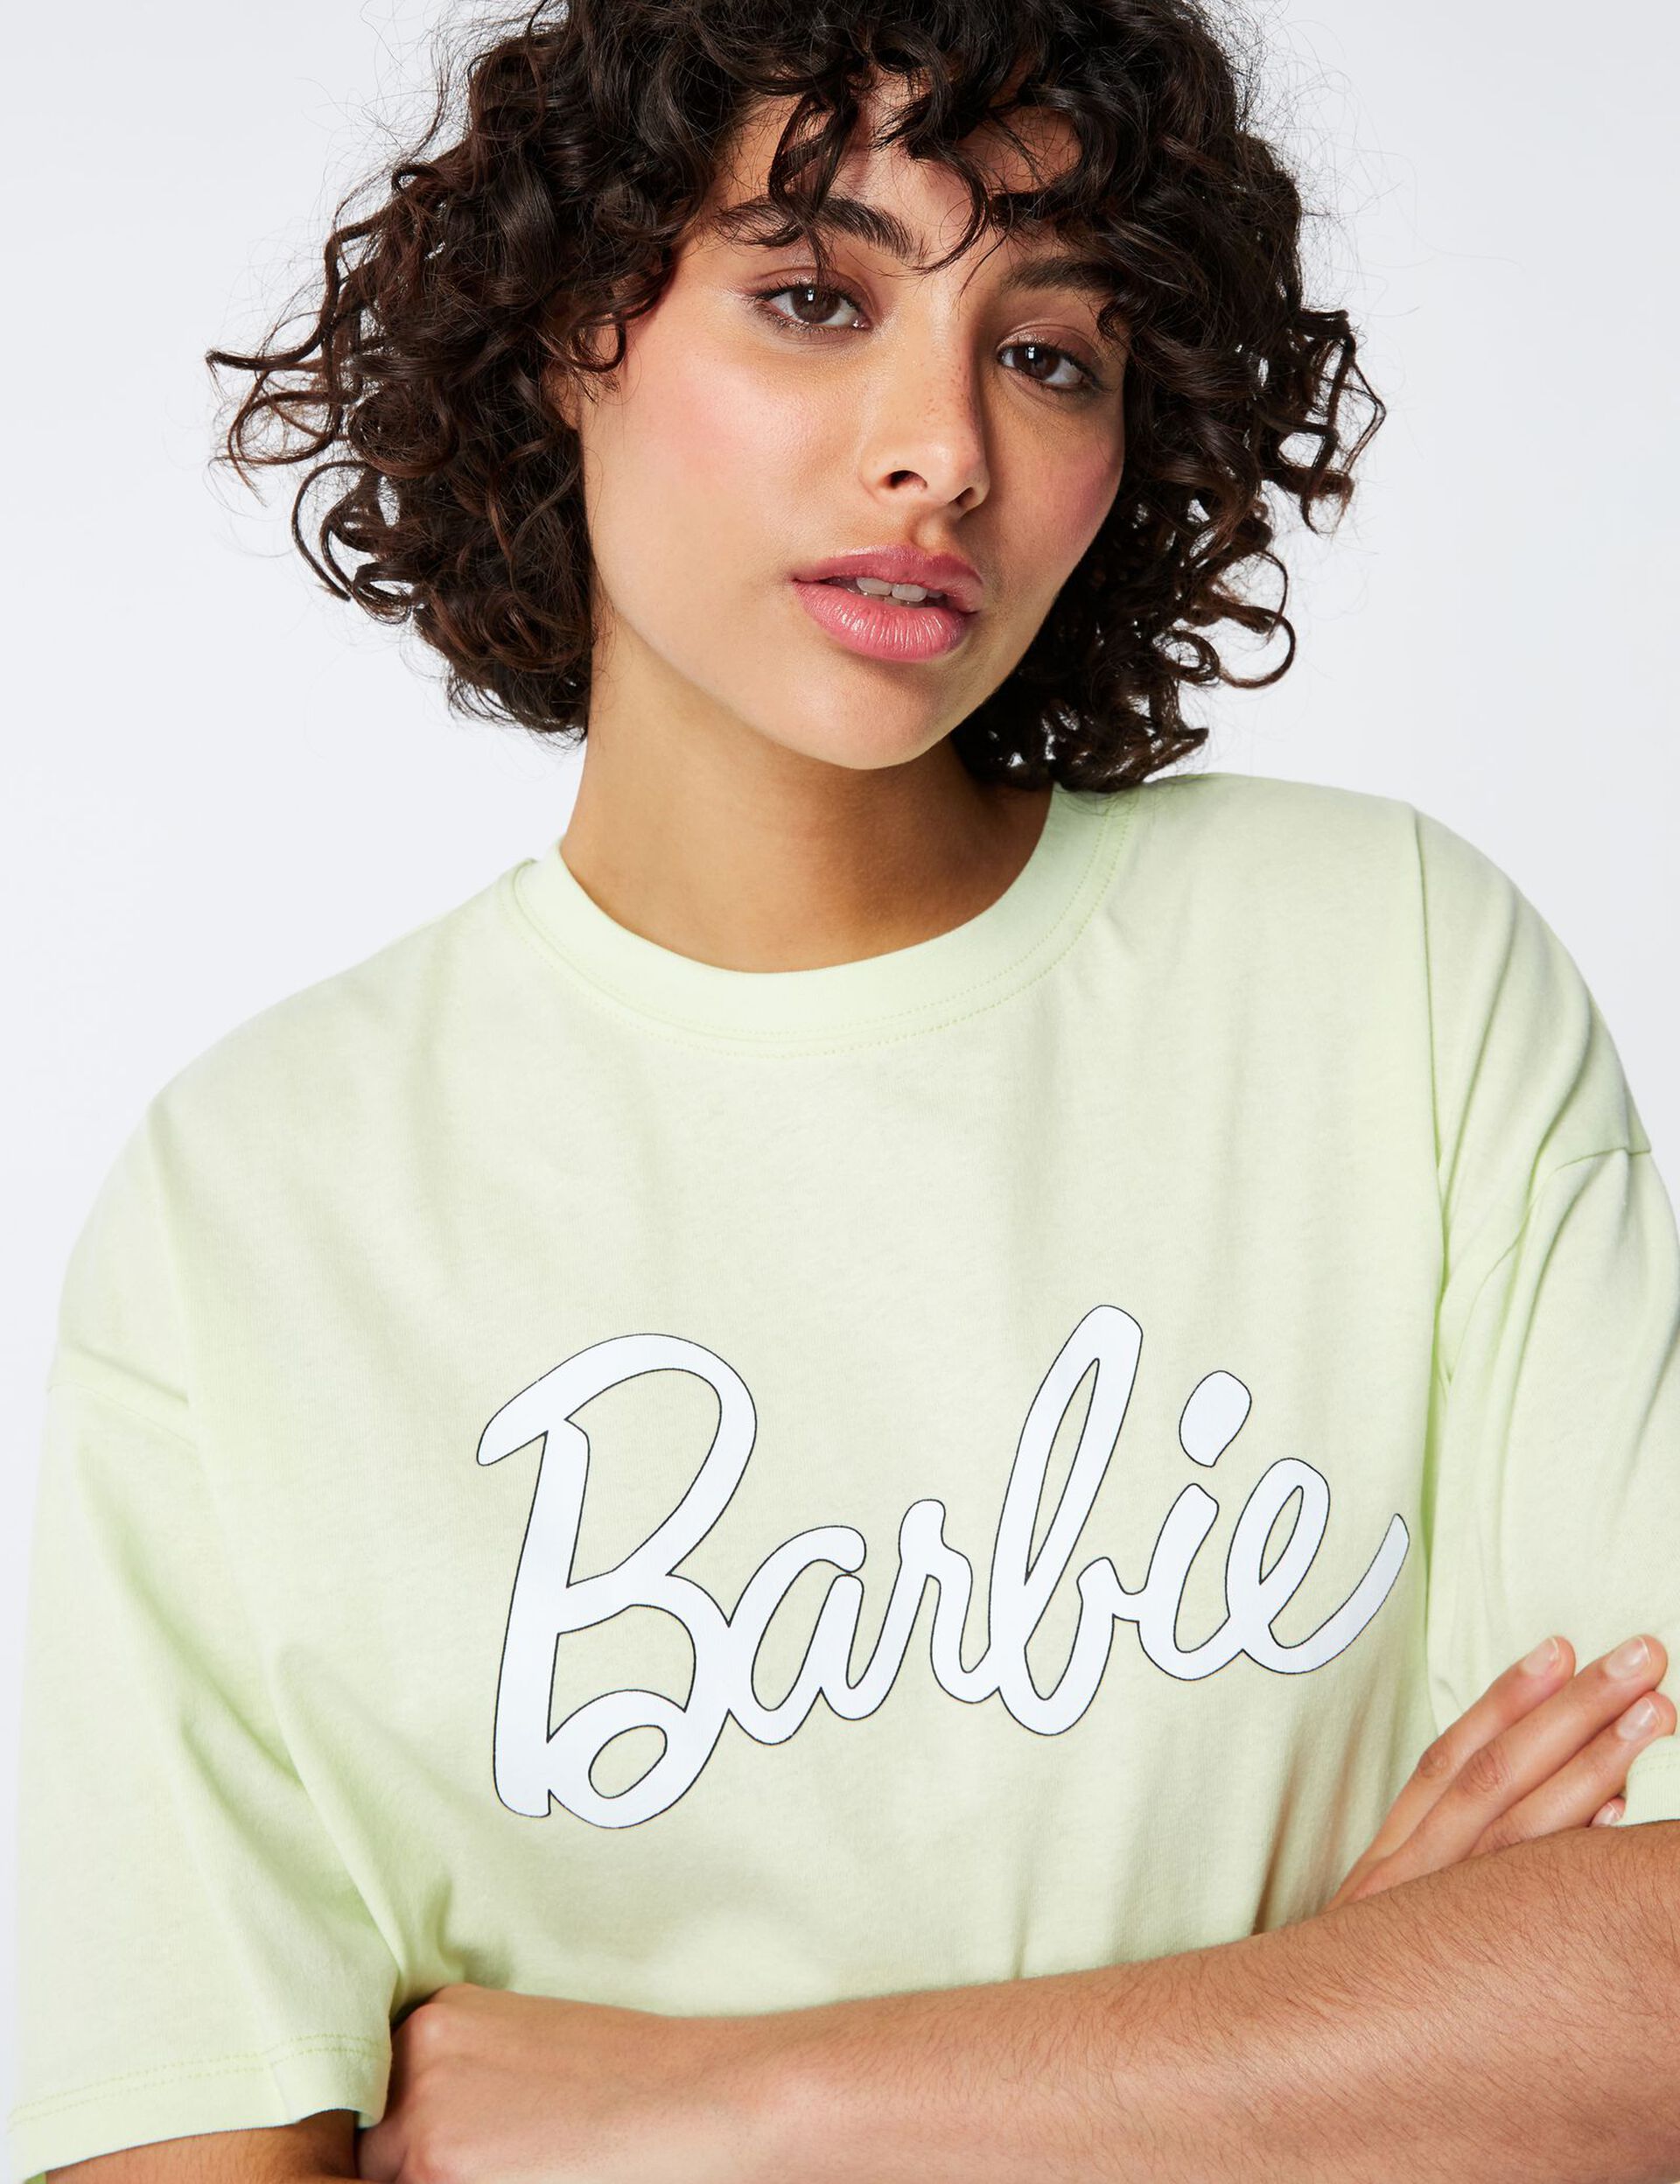 Barbie T-shirt